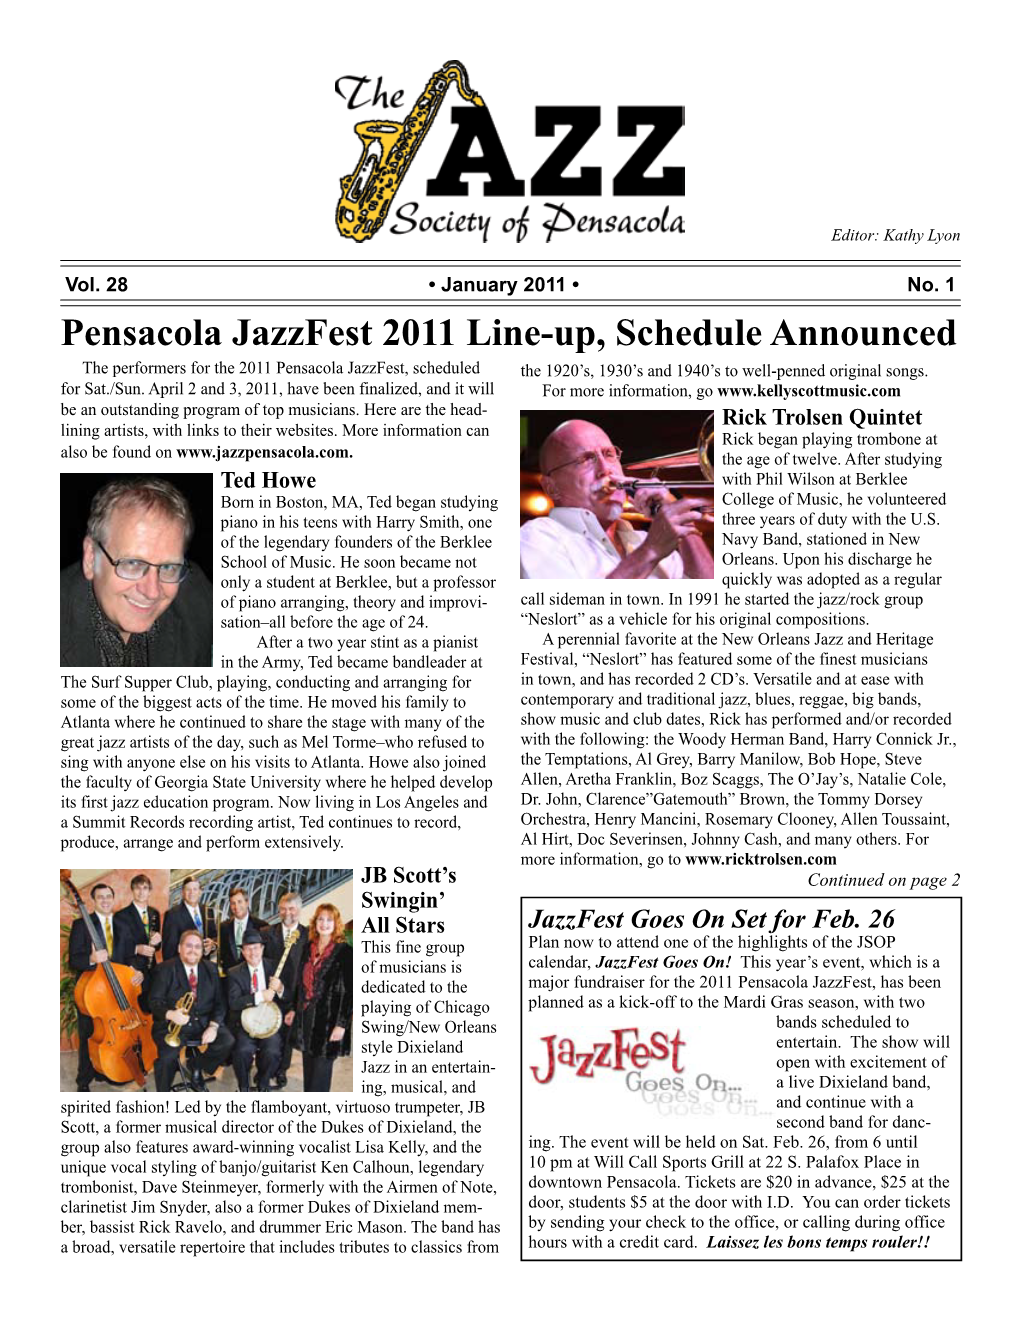 Pensacola Jazzfest 2011 Line-Up, Schedule Announced